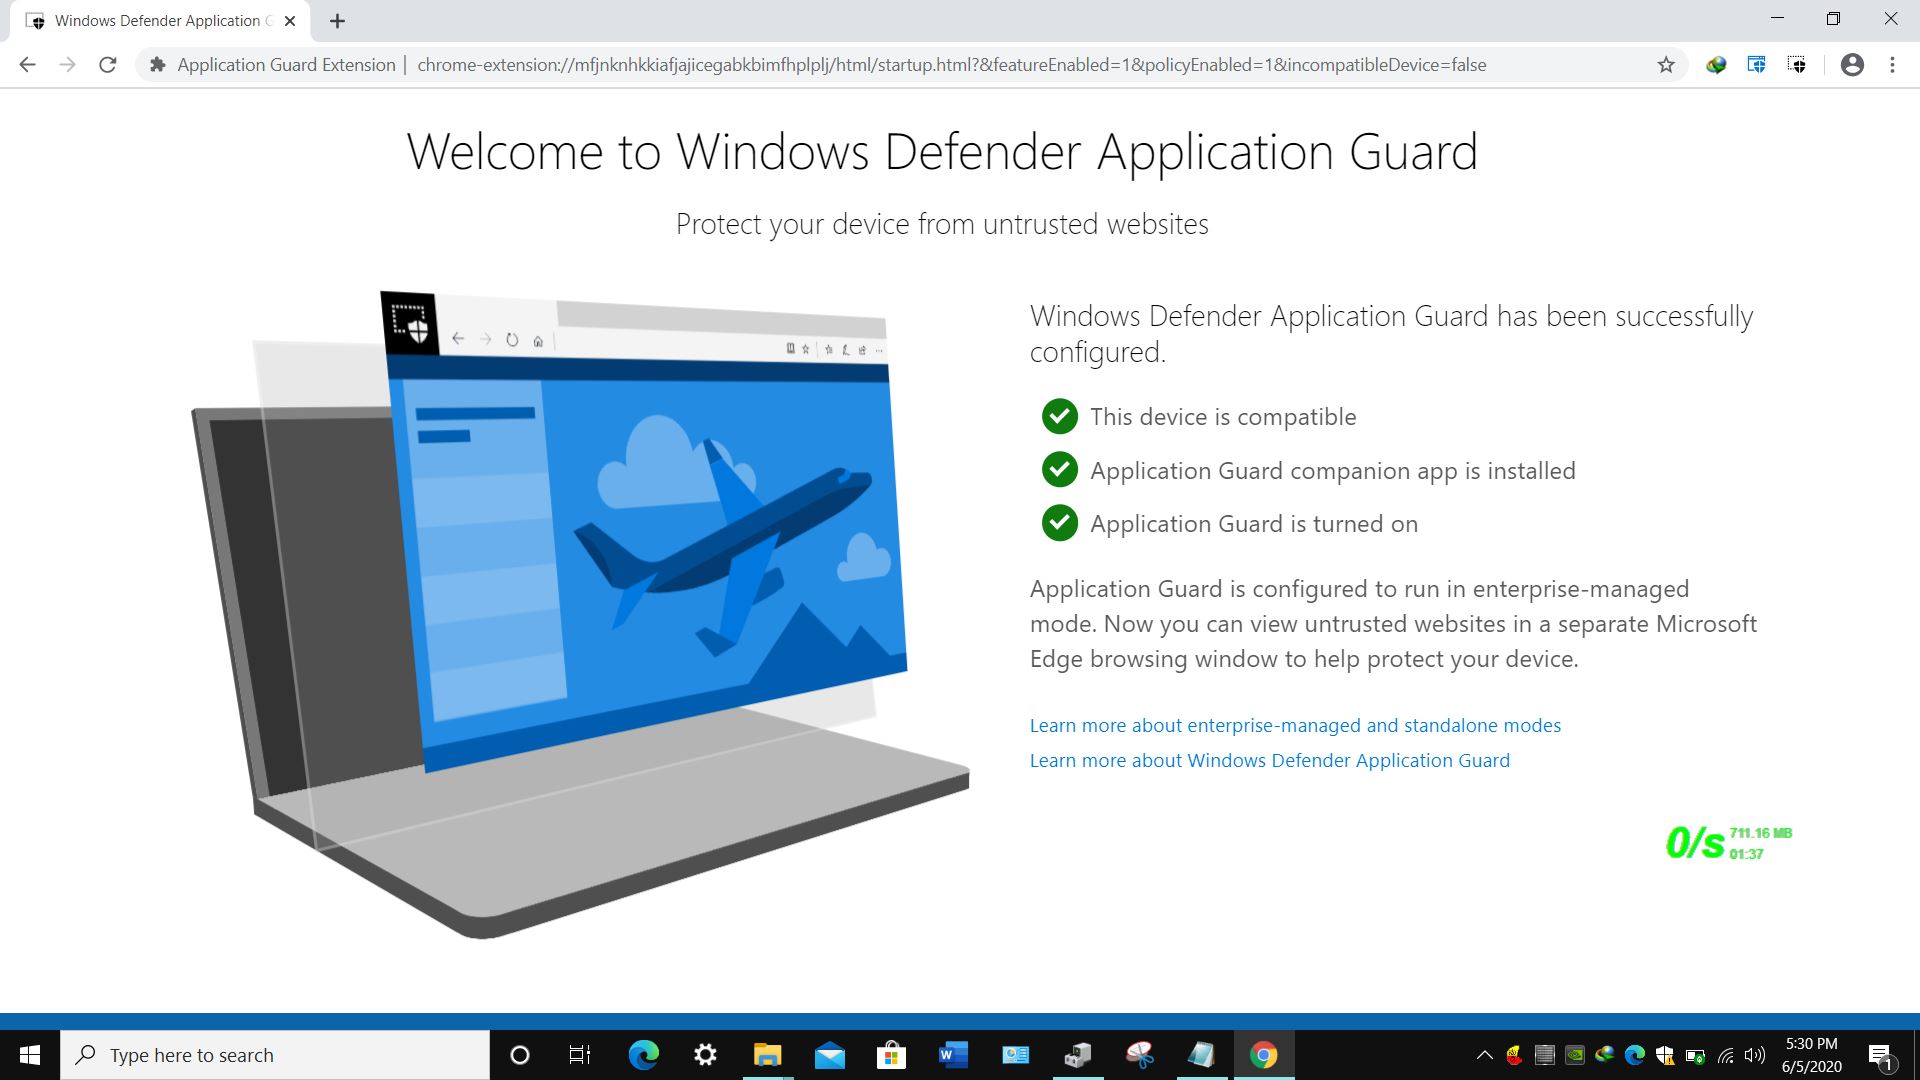 Make your Favorite Browser to more secure by enabling windowsb defender application guard... 24fd7680-23b0-4b4d-99d3-b1ff1a9d8876?upload=true.jpg